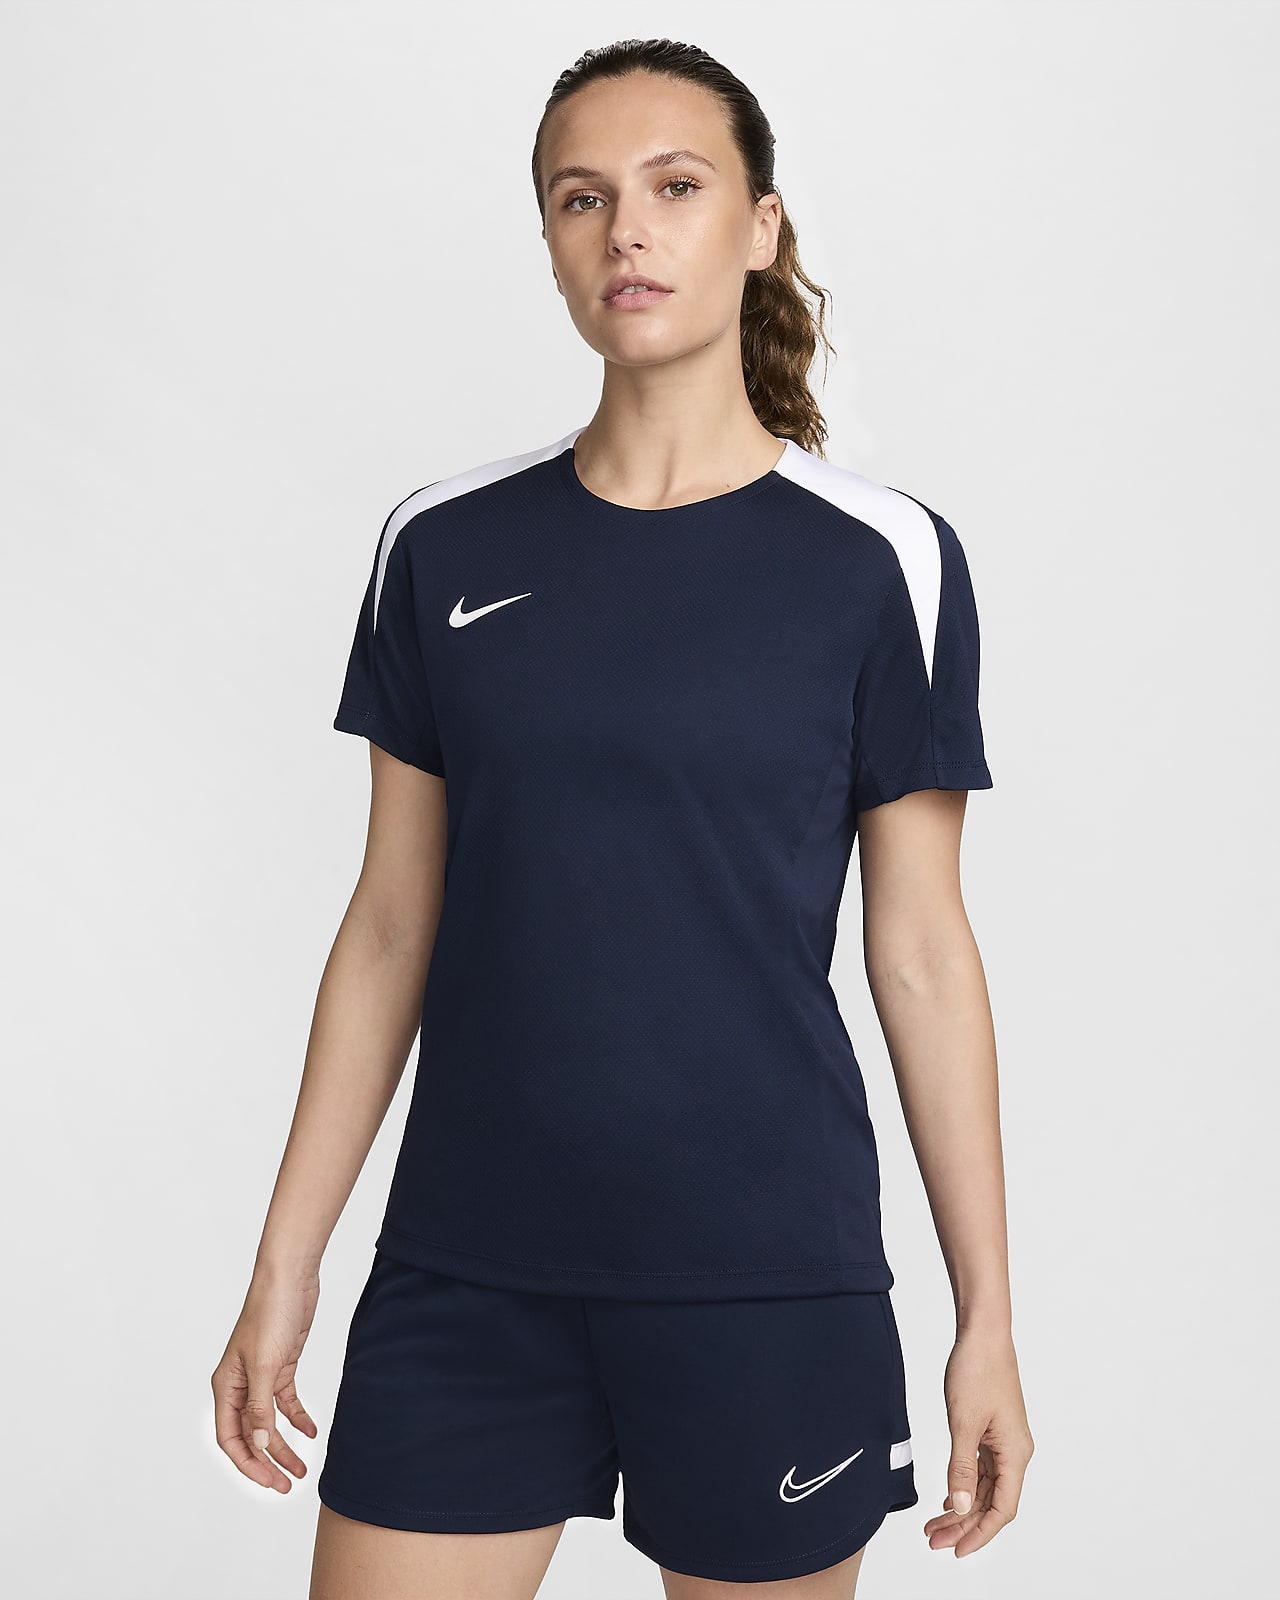 Nike Strike Dri-FIT rövid ujjú női futballfelső